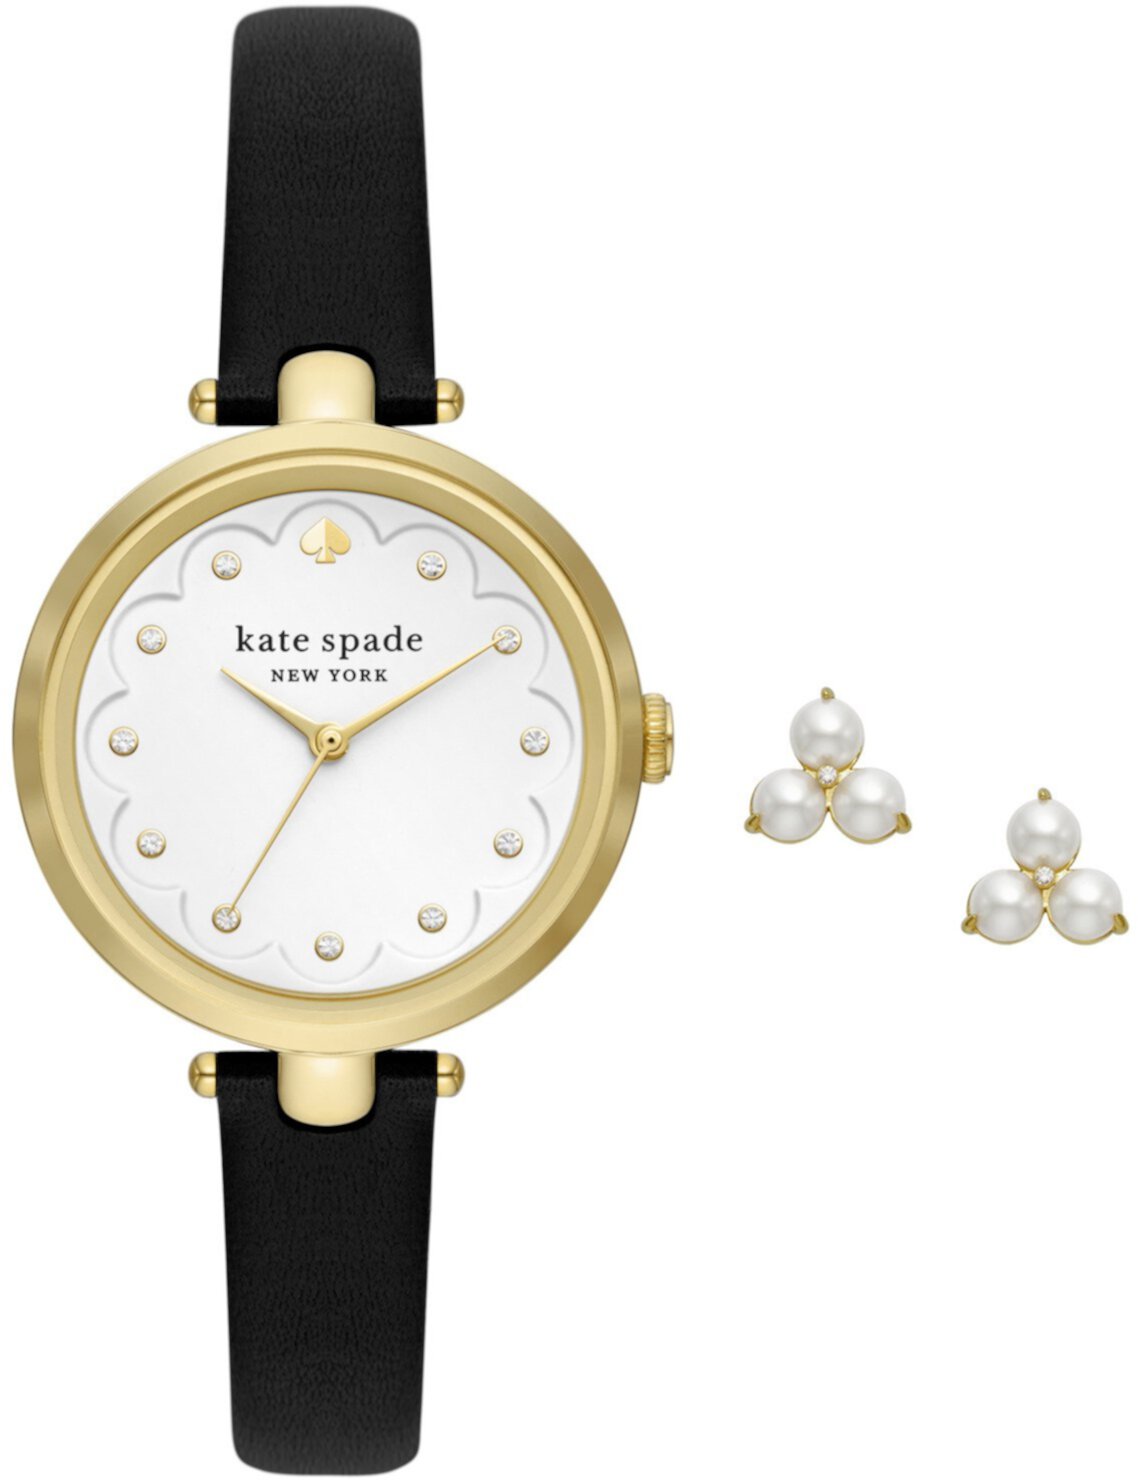 Голландские кожаные часы 34 мм - KSW1776SET Kate Spade New York